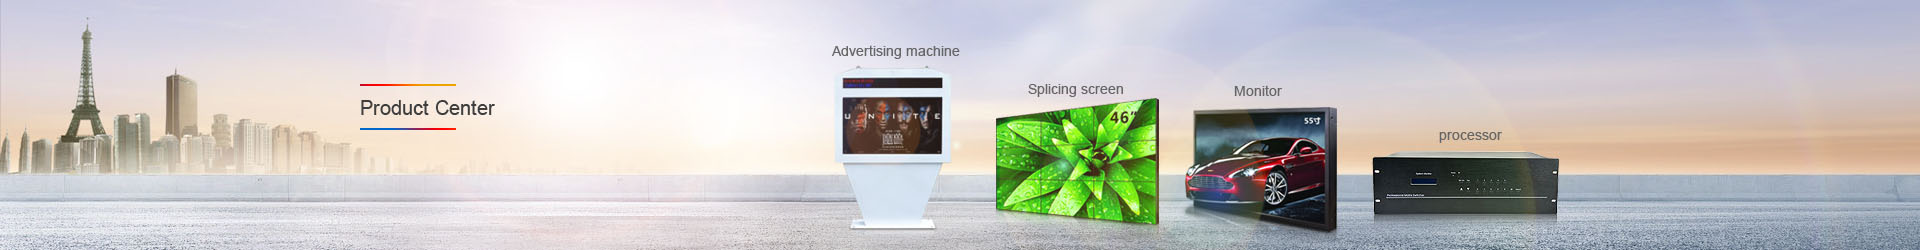 stand-floor advertising machine